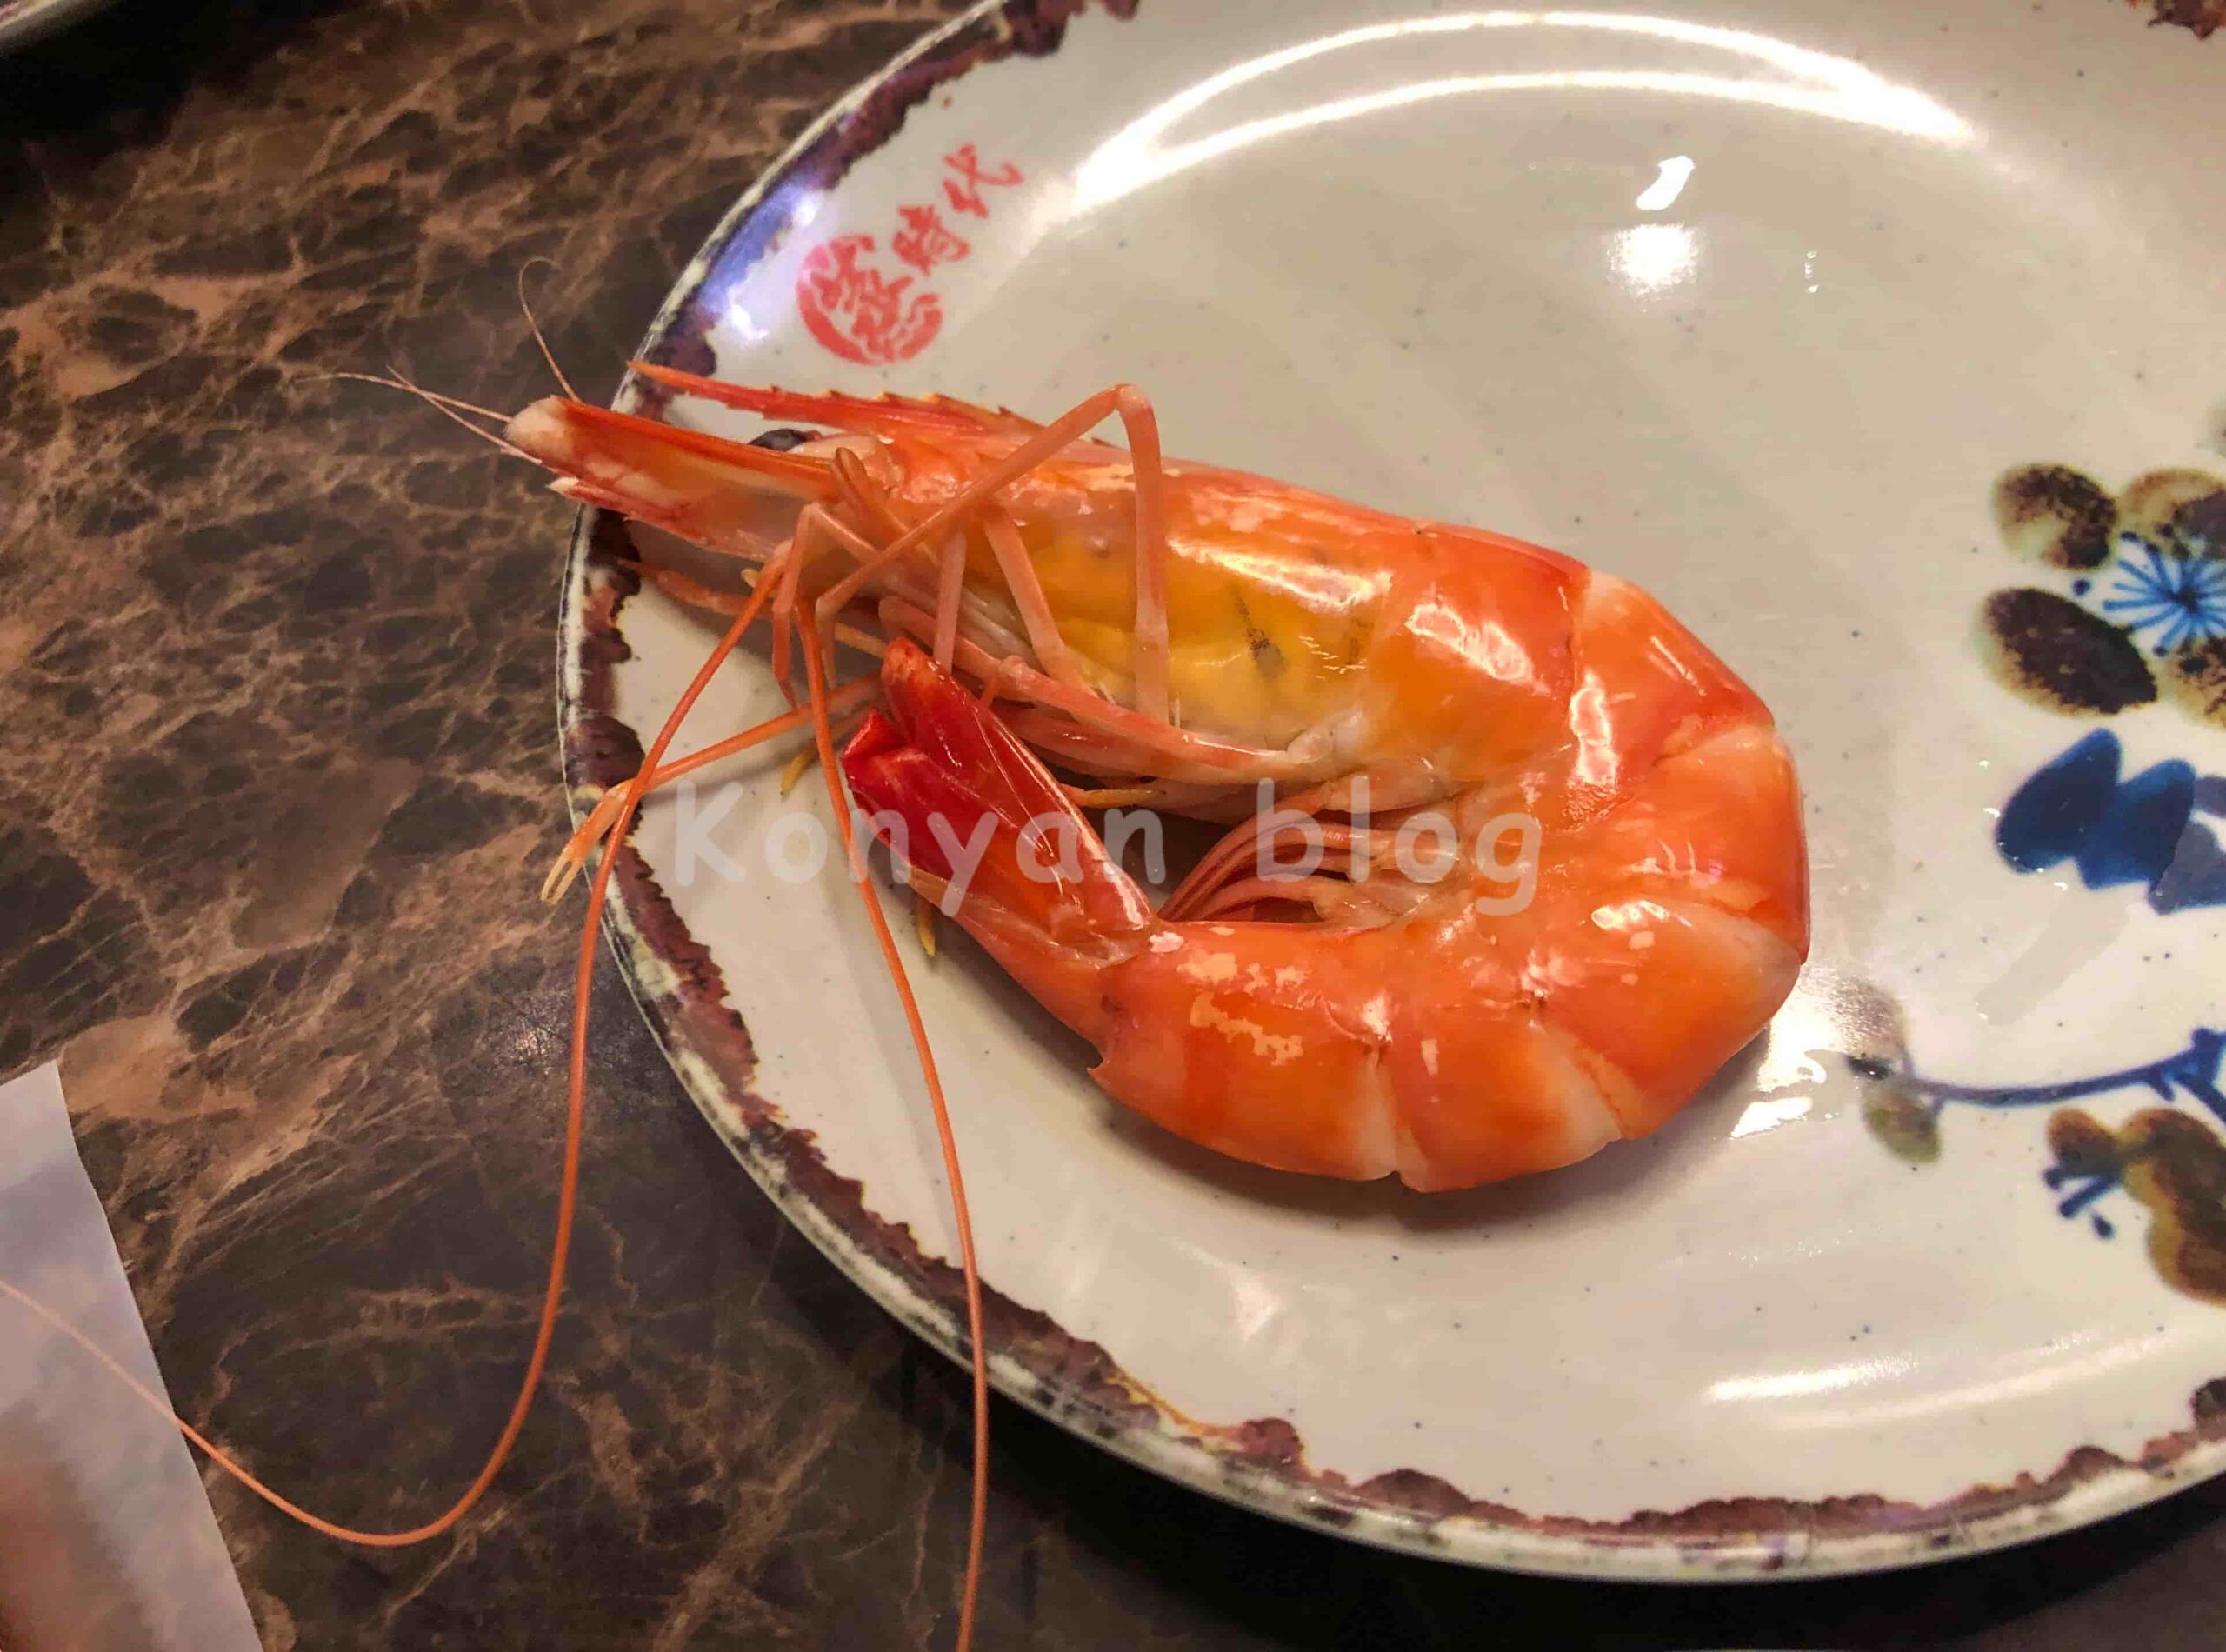 Steam Era Seafood Restaurant 蒸时代海鲜蒸汽火锅　Jalan Imbi 海老